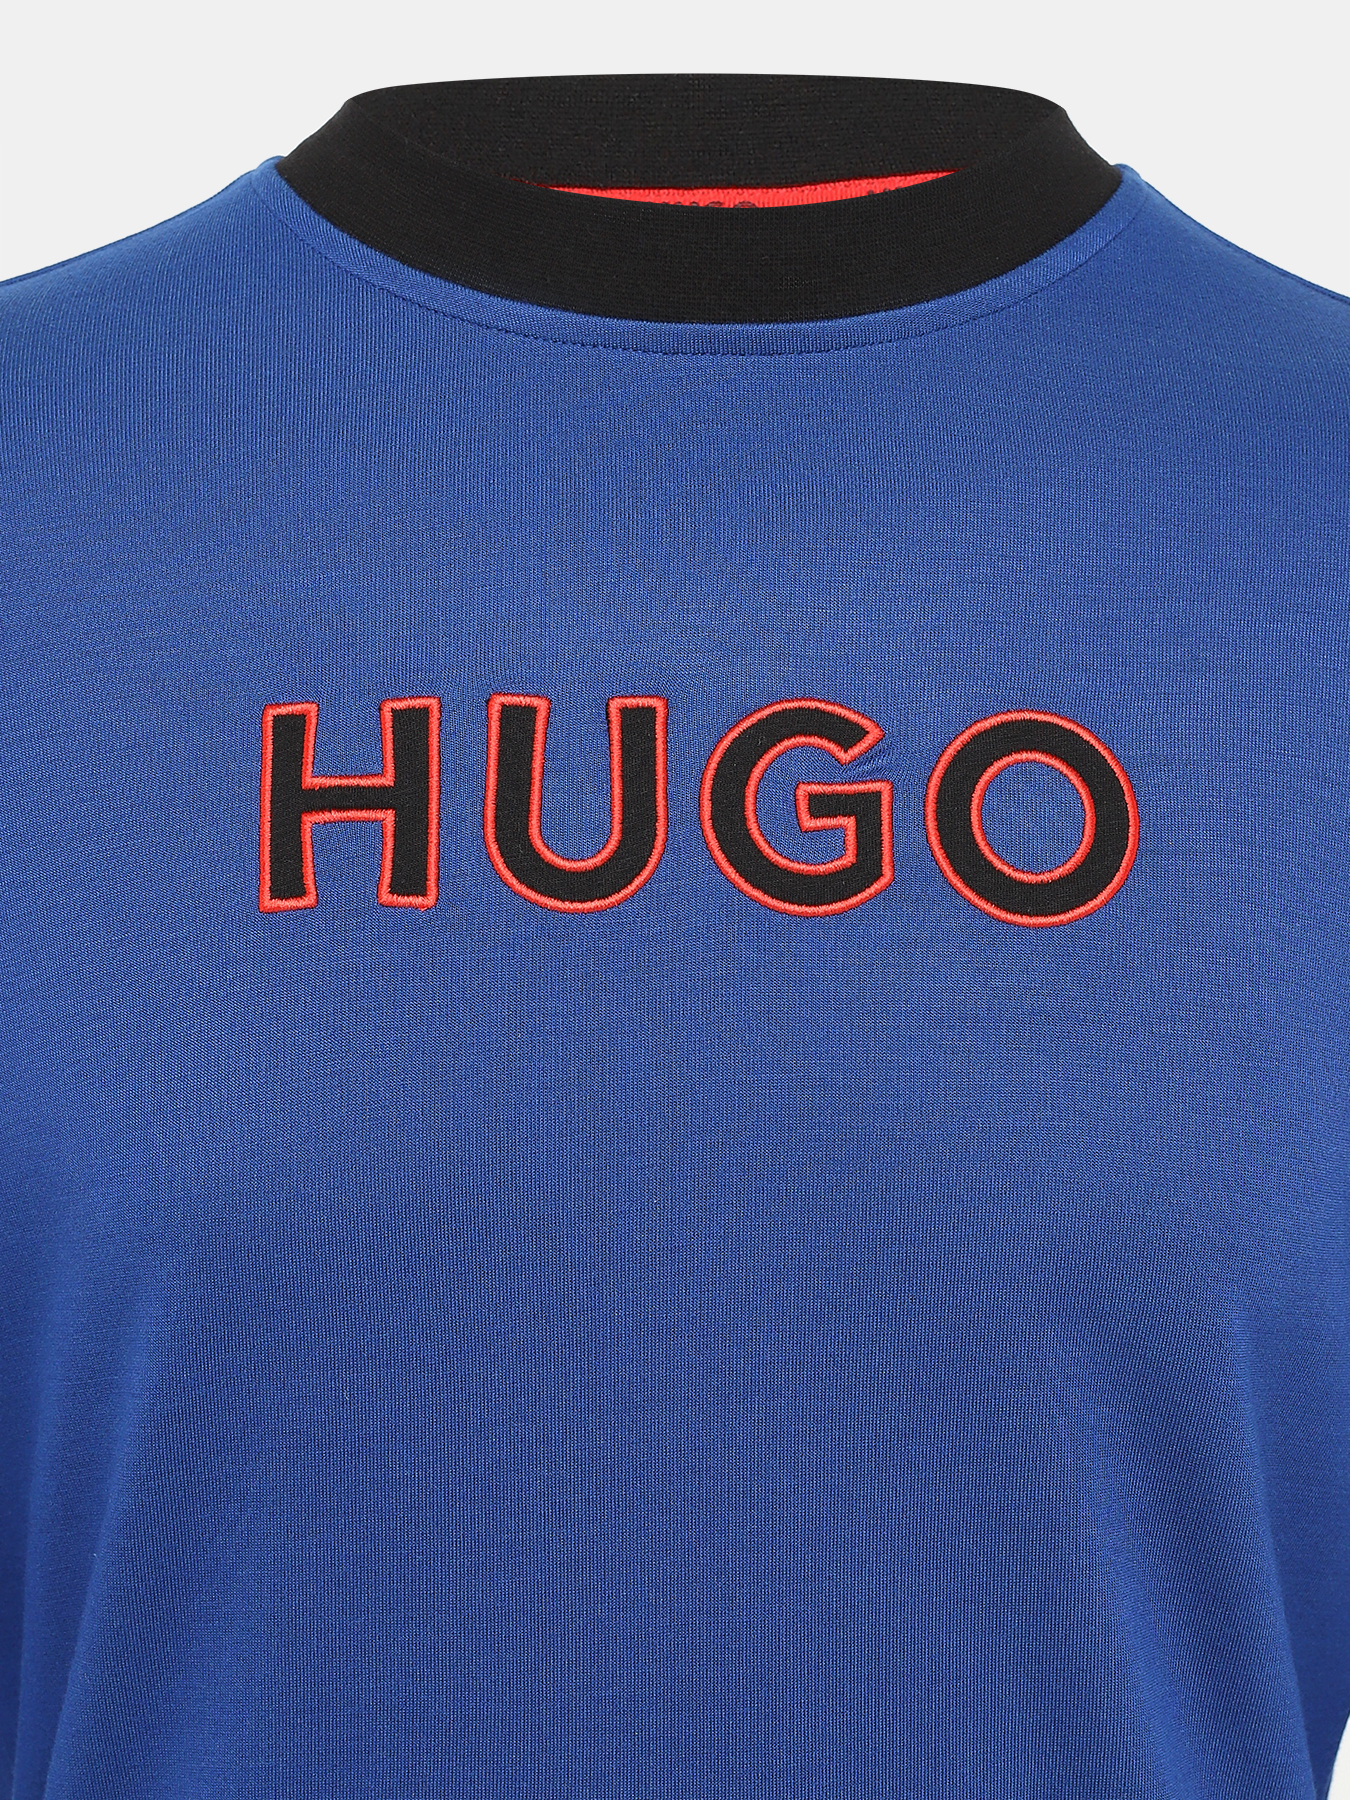 Пижама Jaglion HUGO 438641-044, цвет синий, размер 50 - фото 4